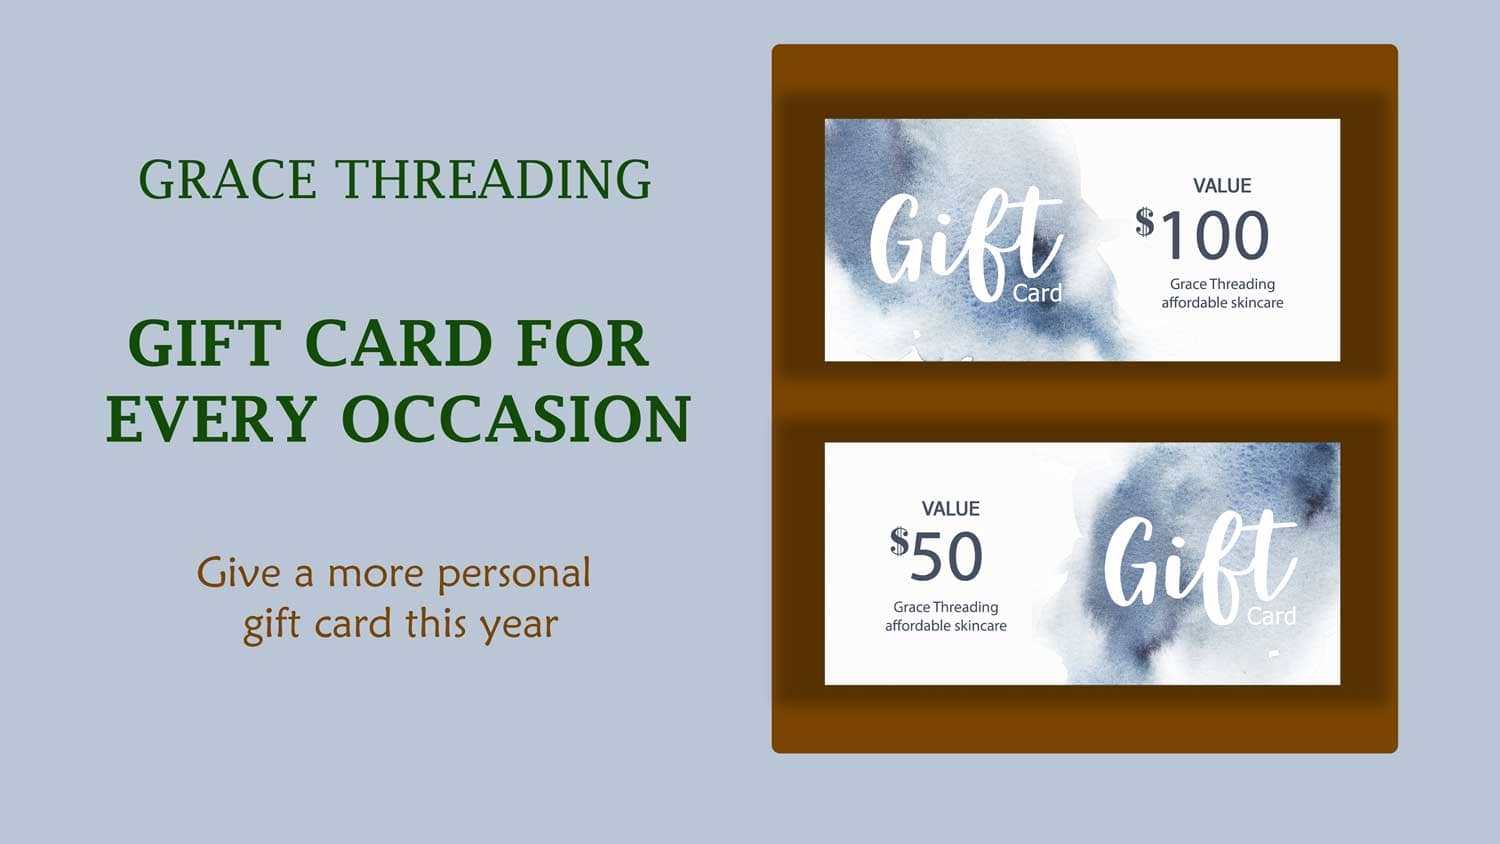 Grace-threading-card-banner